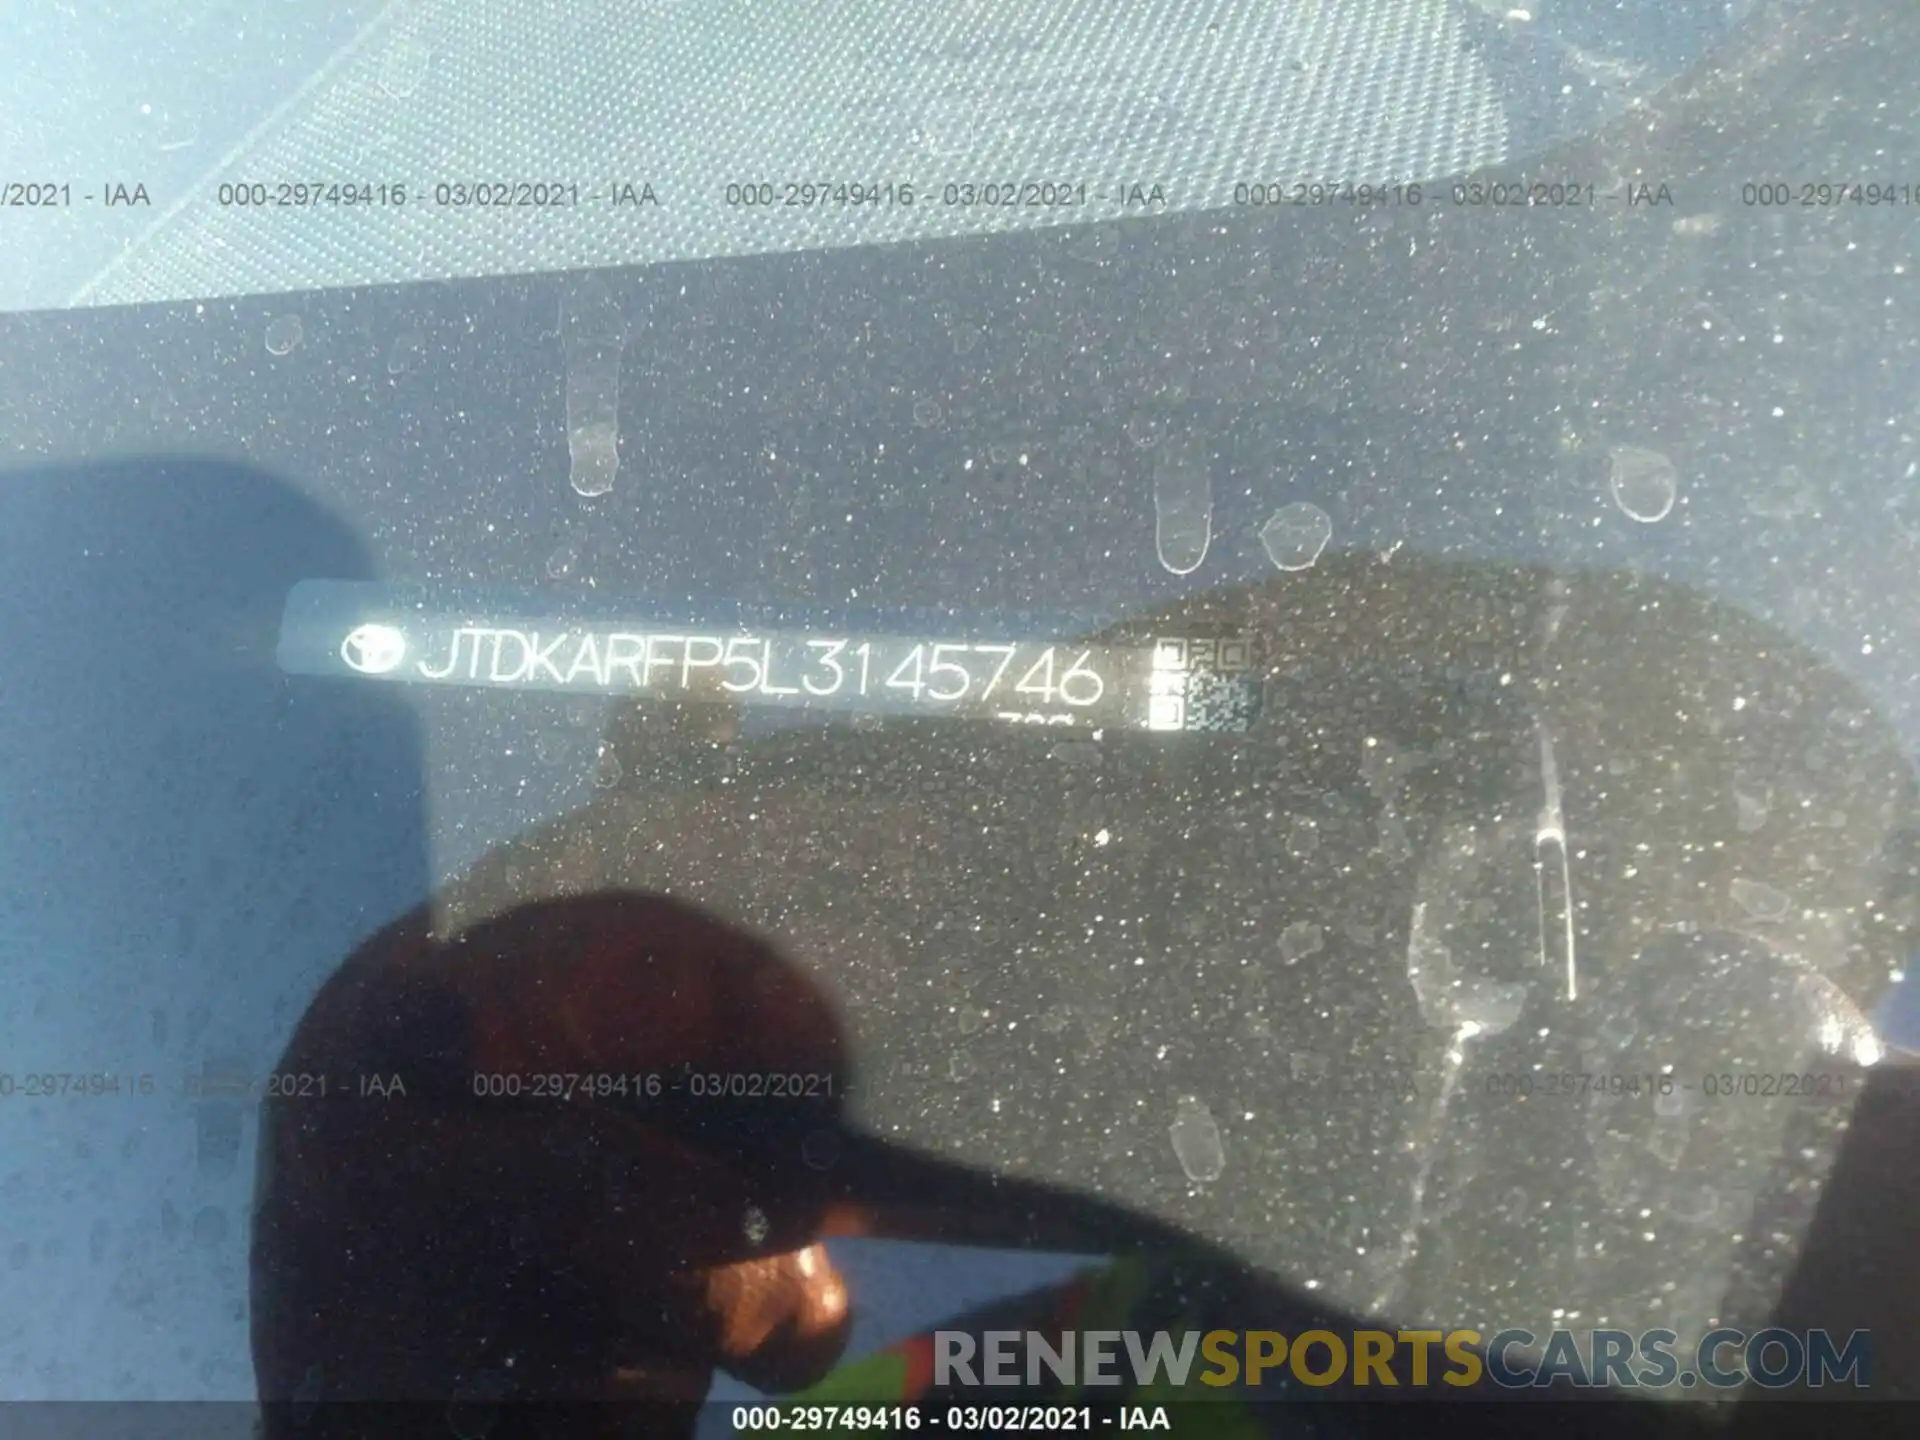 9 Photograph of a damaged car JTDKARFP5L3145746 TOYOTA PRIUS PRIME 2020